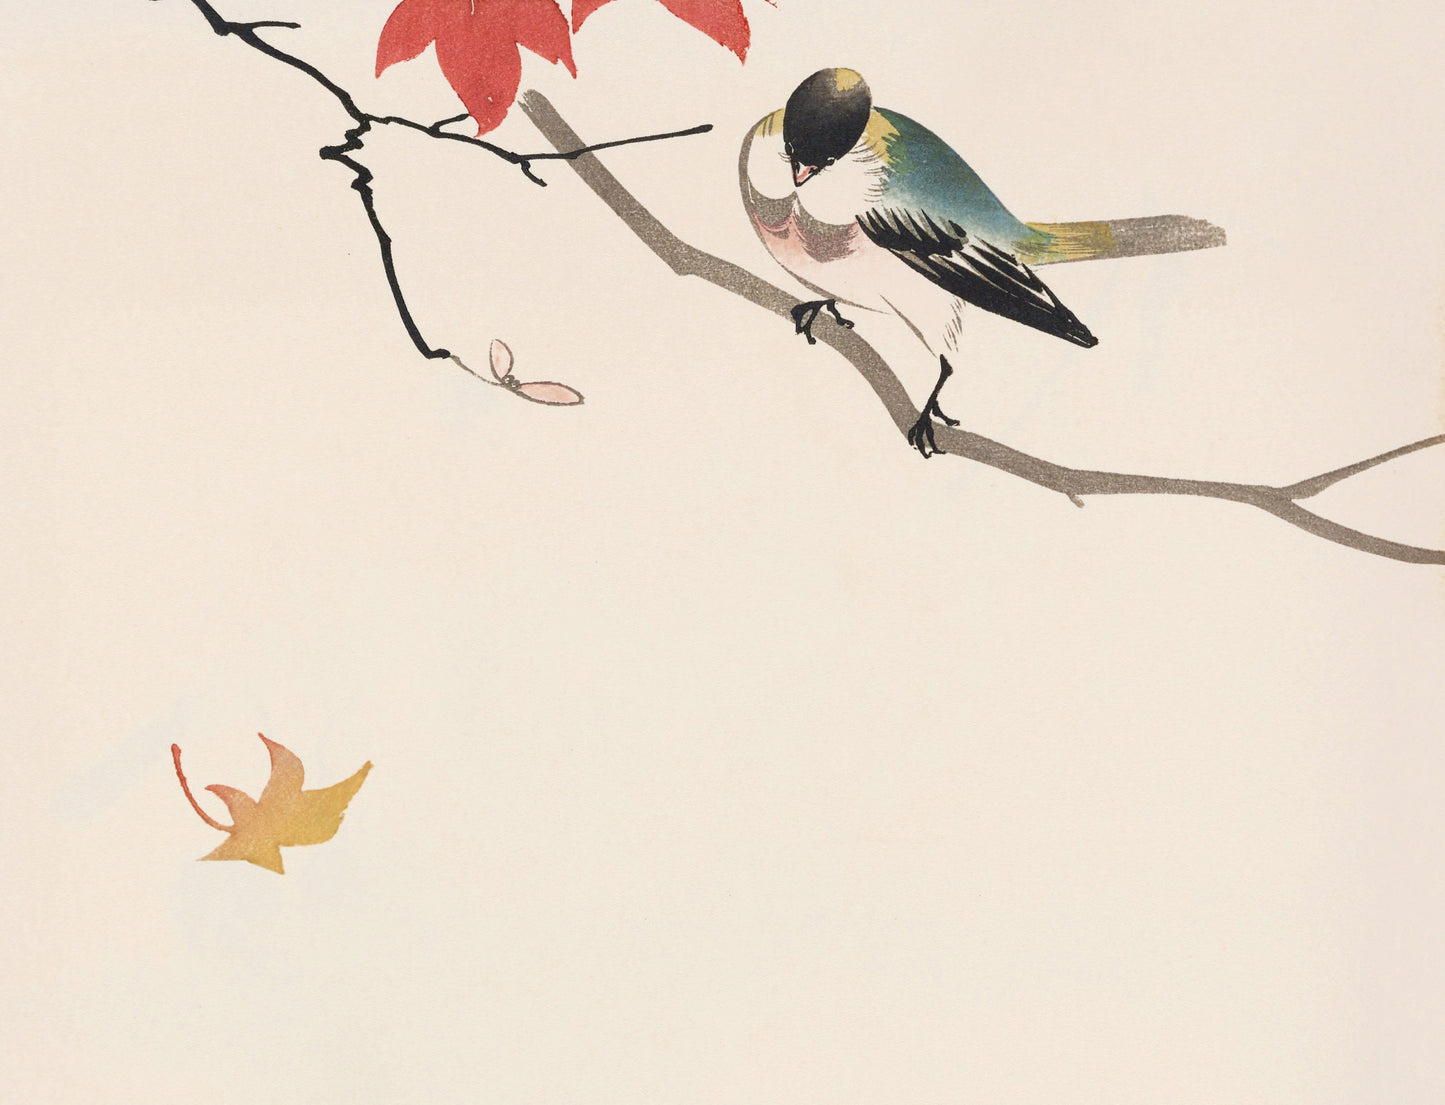 Jiro Takeuchi Japanese Minimalist Woodblock Prints [17 Images]